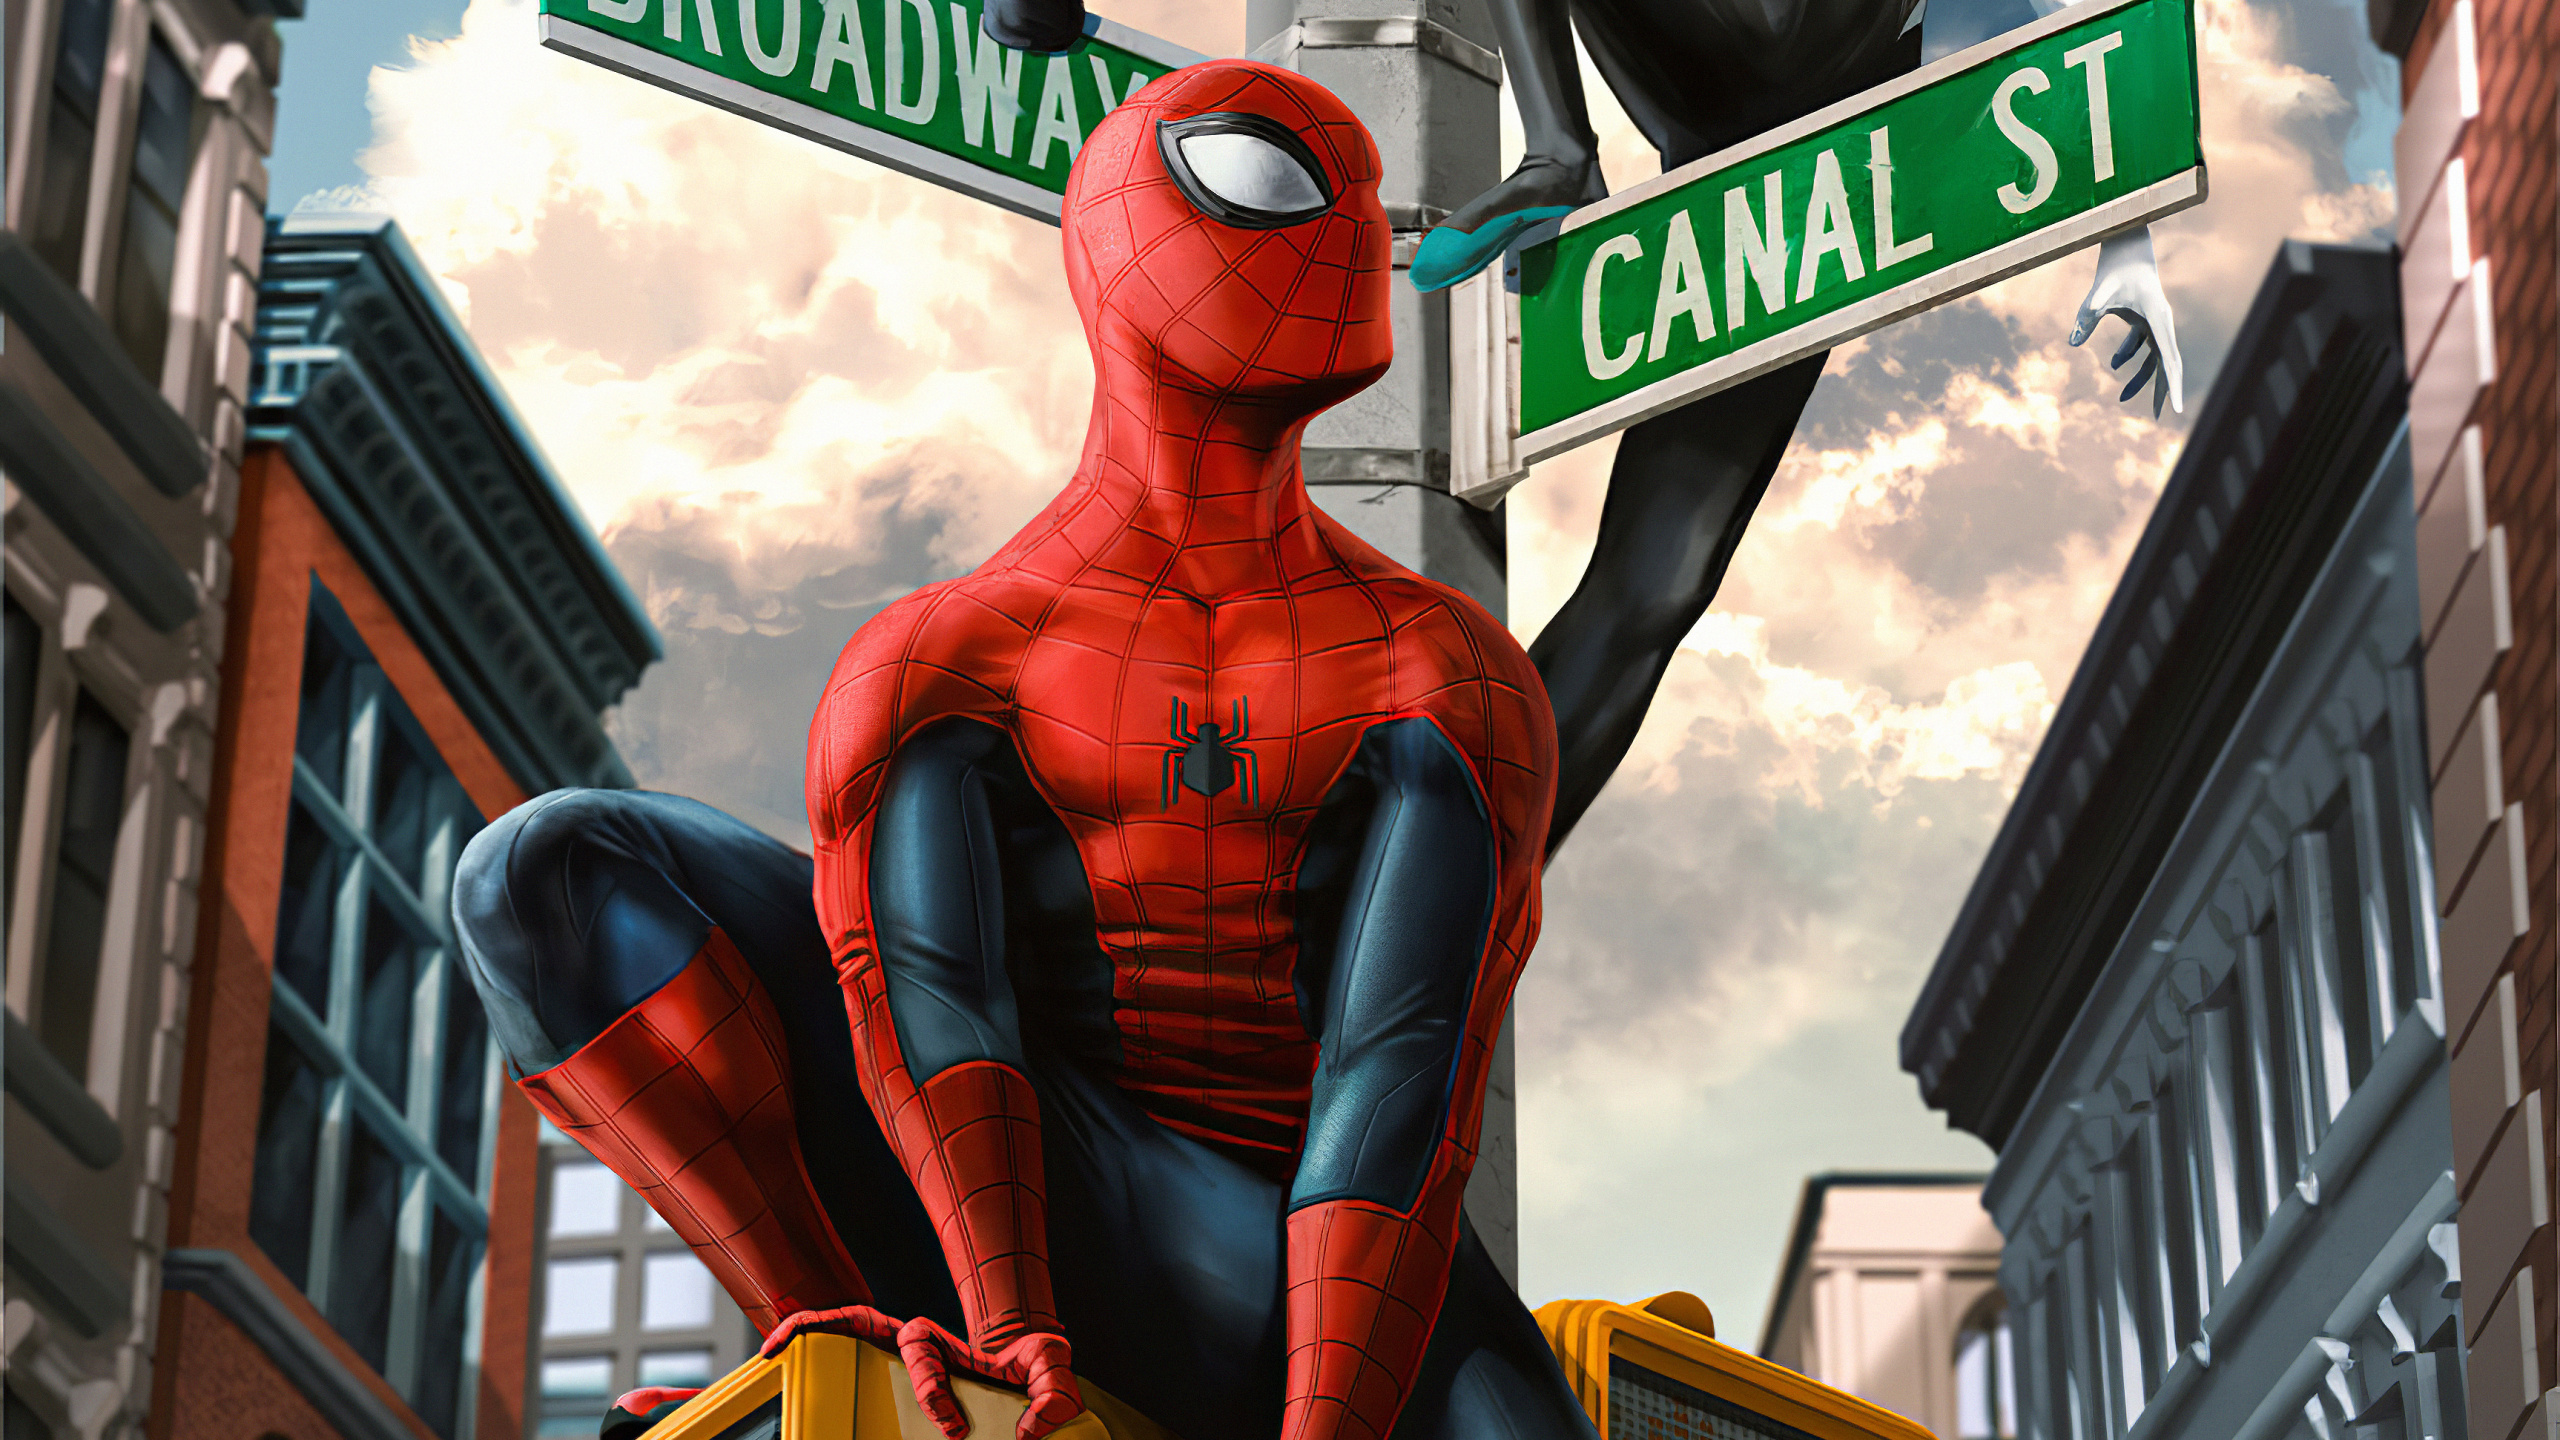 Spider-man, 里*莫拉莱斯, 惊奇漫画, 超级英雄, 英雄 壁纸 2560x1440 允许